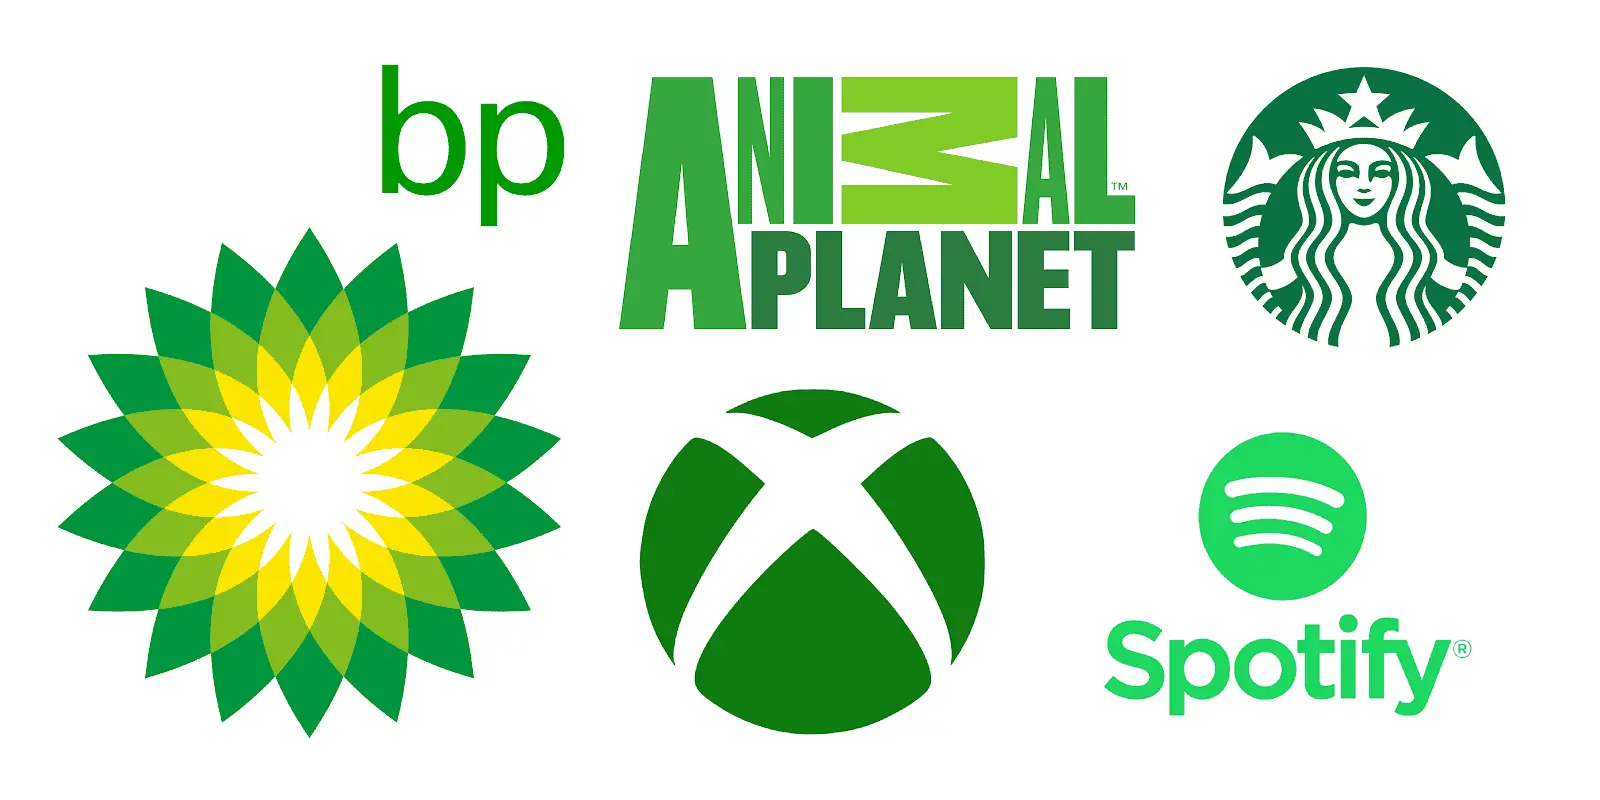 Green logos